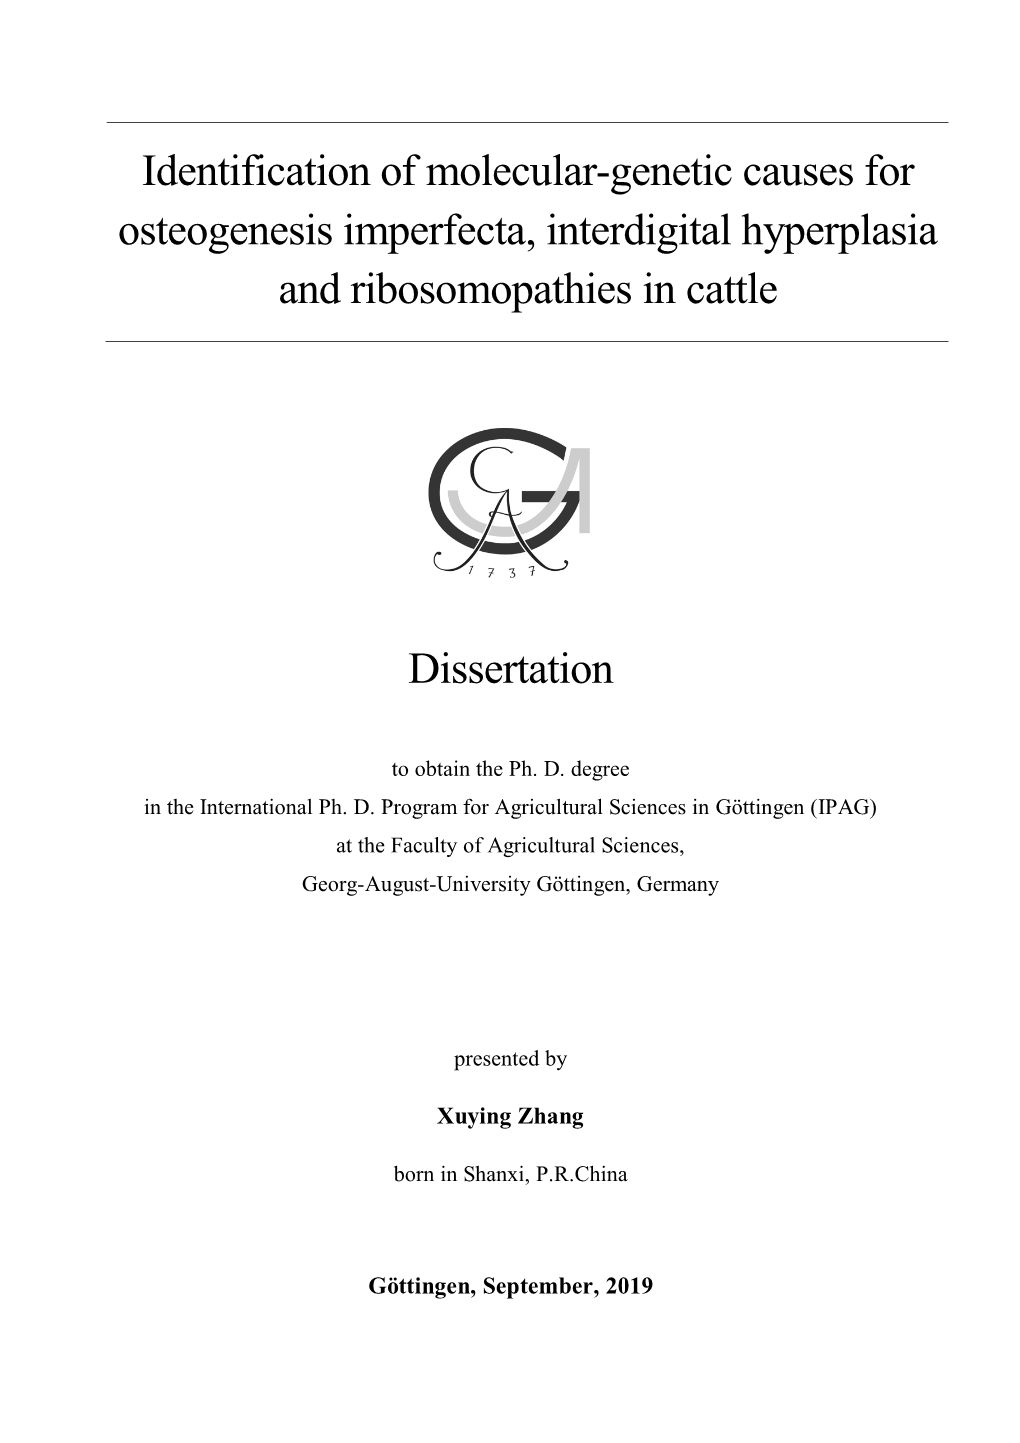 Identification of Molecular-Genetic Causes for Osteogenesis Imperfecta, Interdigital Hyperplasia and Ribosomopathies in Cattle